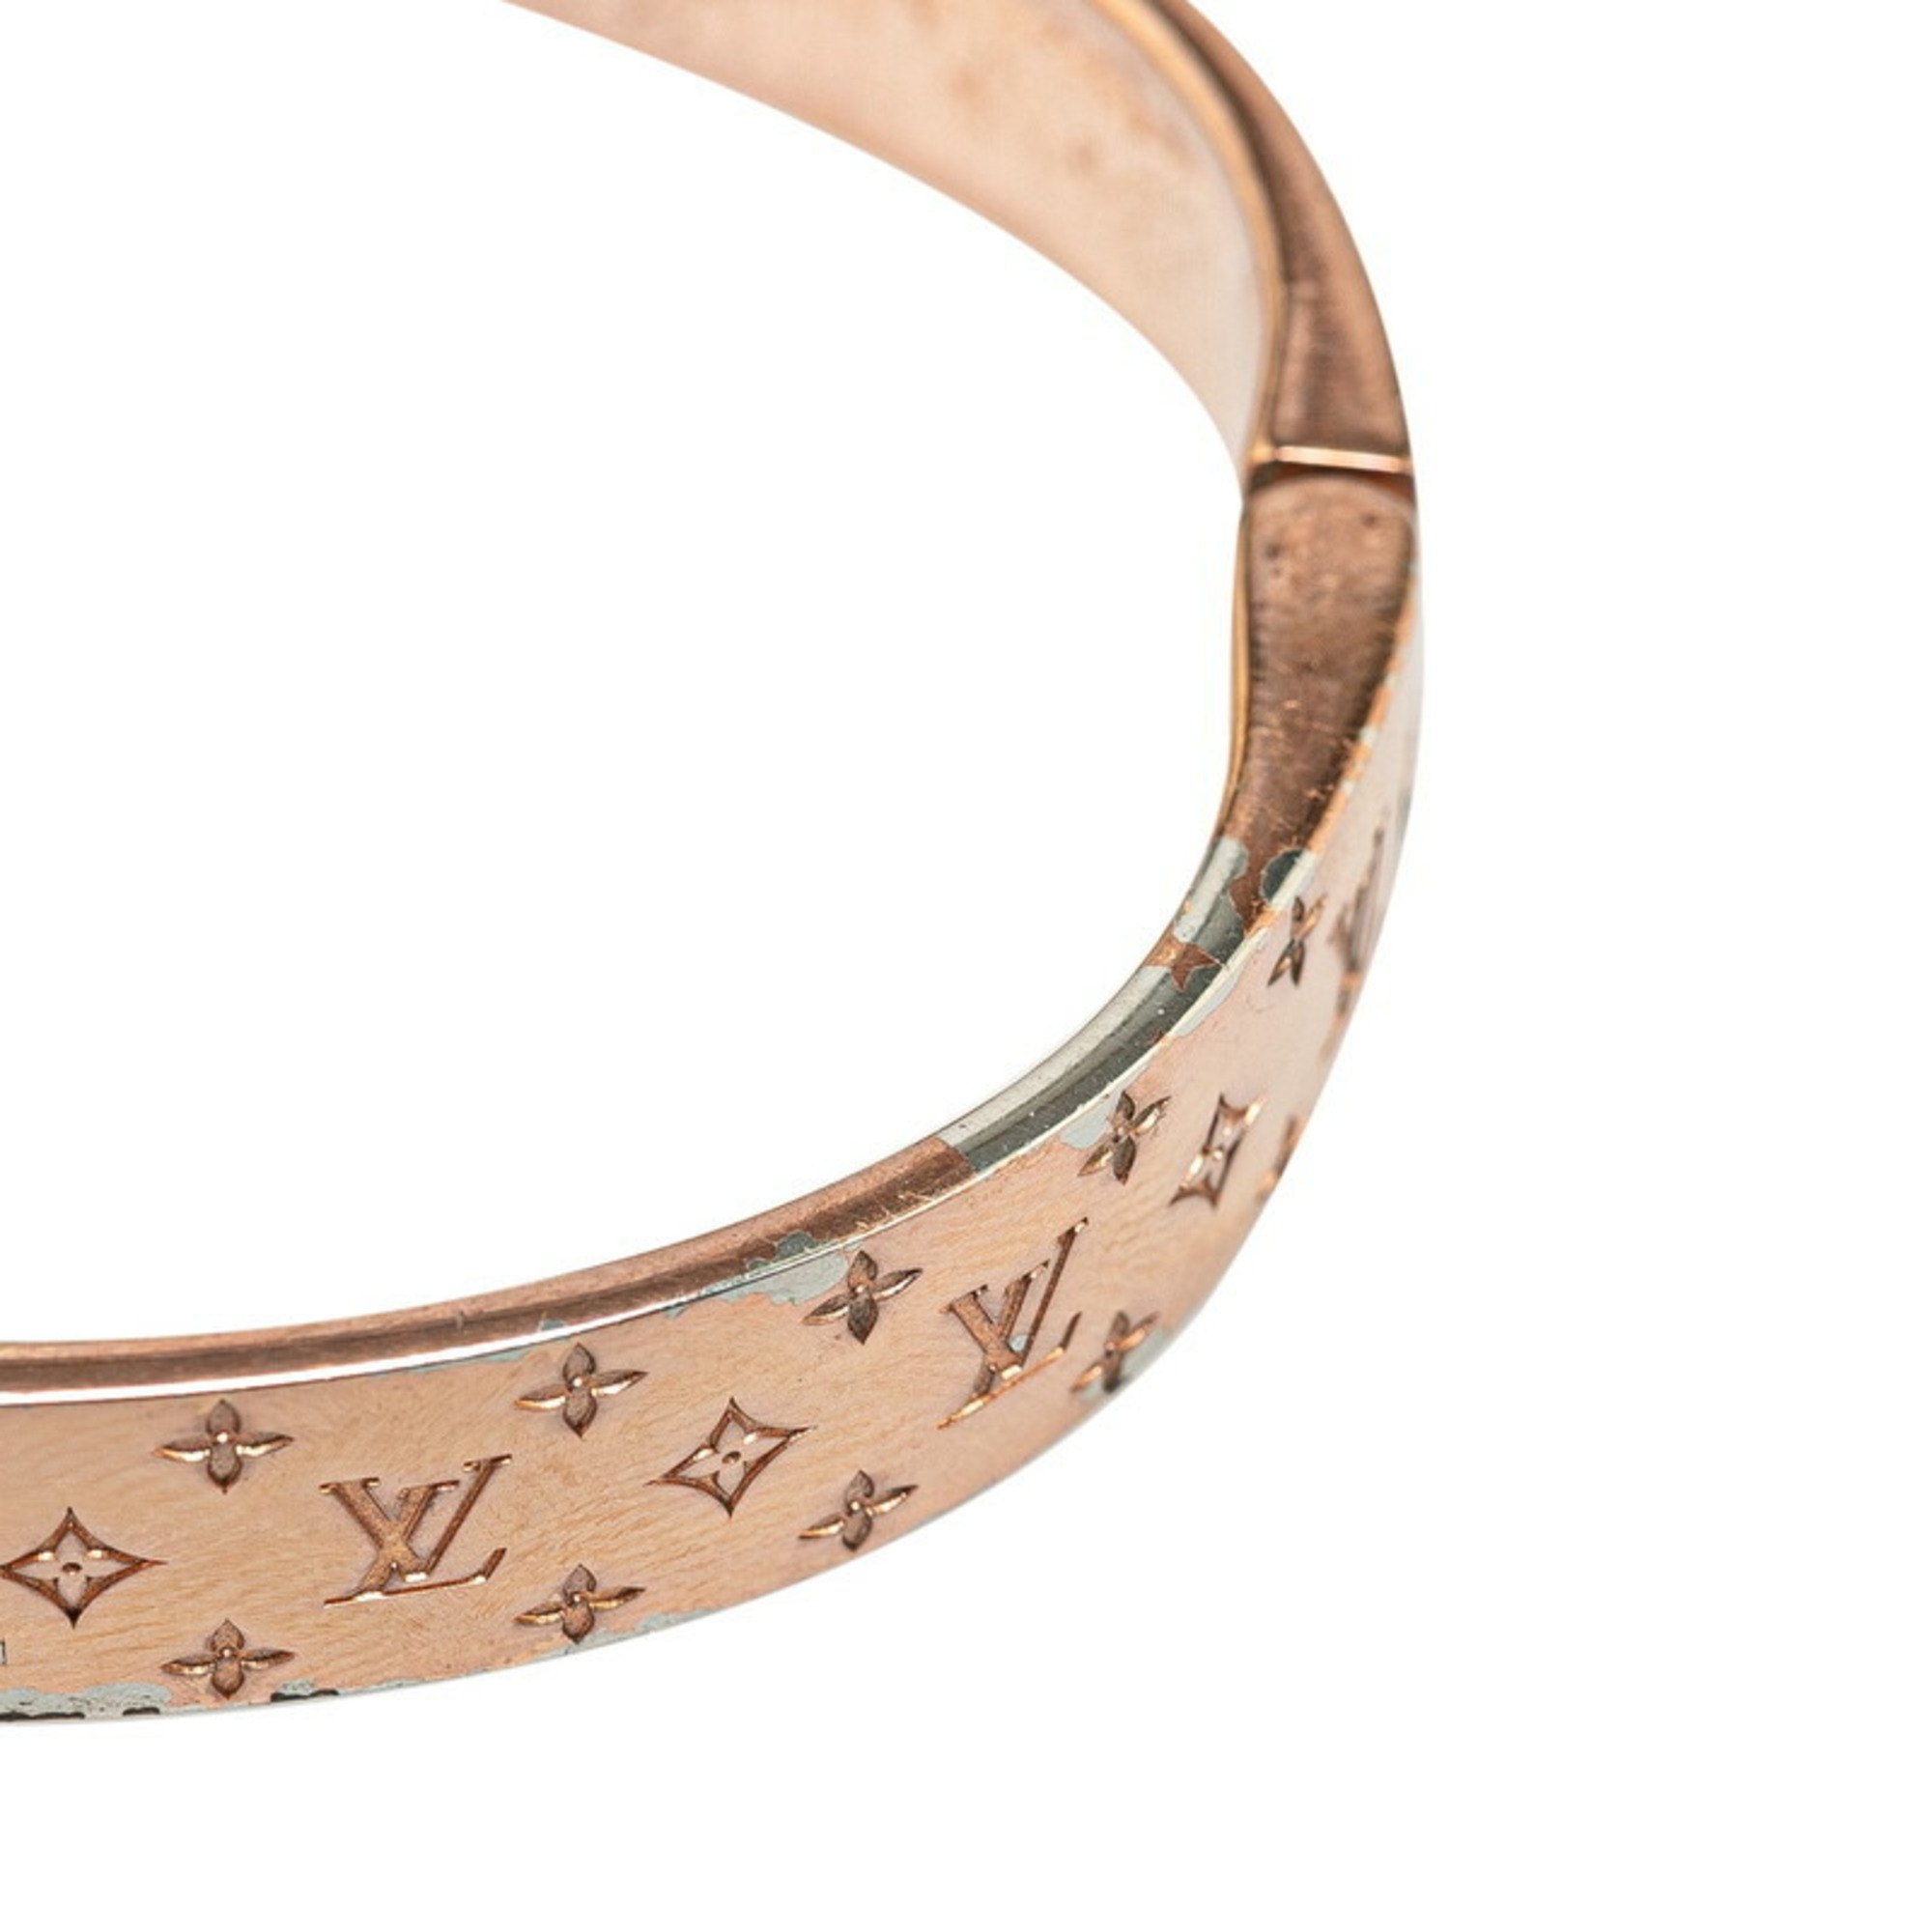 Louis Vuitton Cuff Nanogram Bangle Bracelet Size S M00253 Pink Gold Plated Women's LOUIS VUITTON